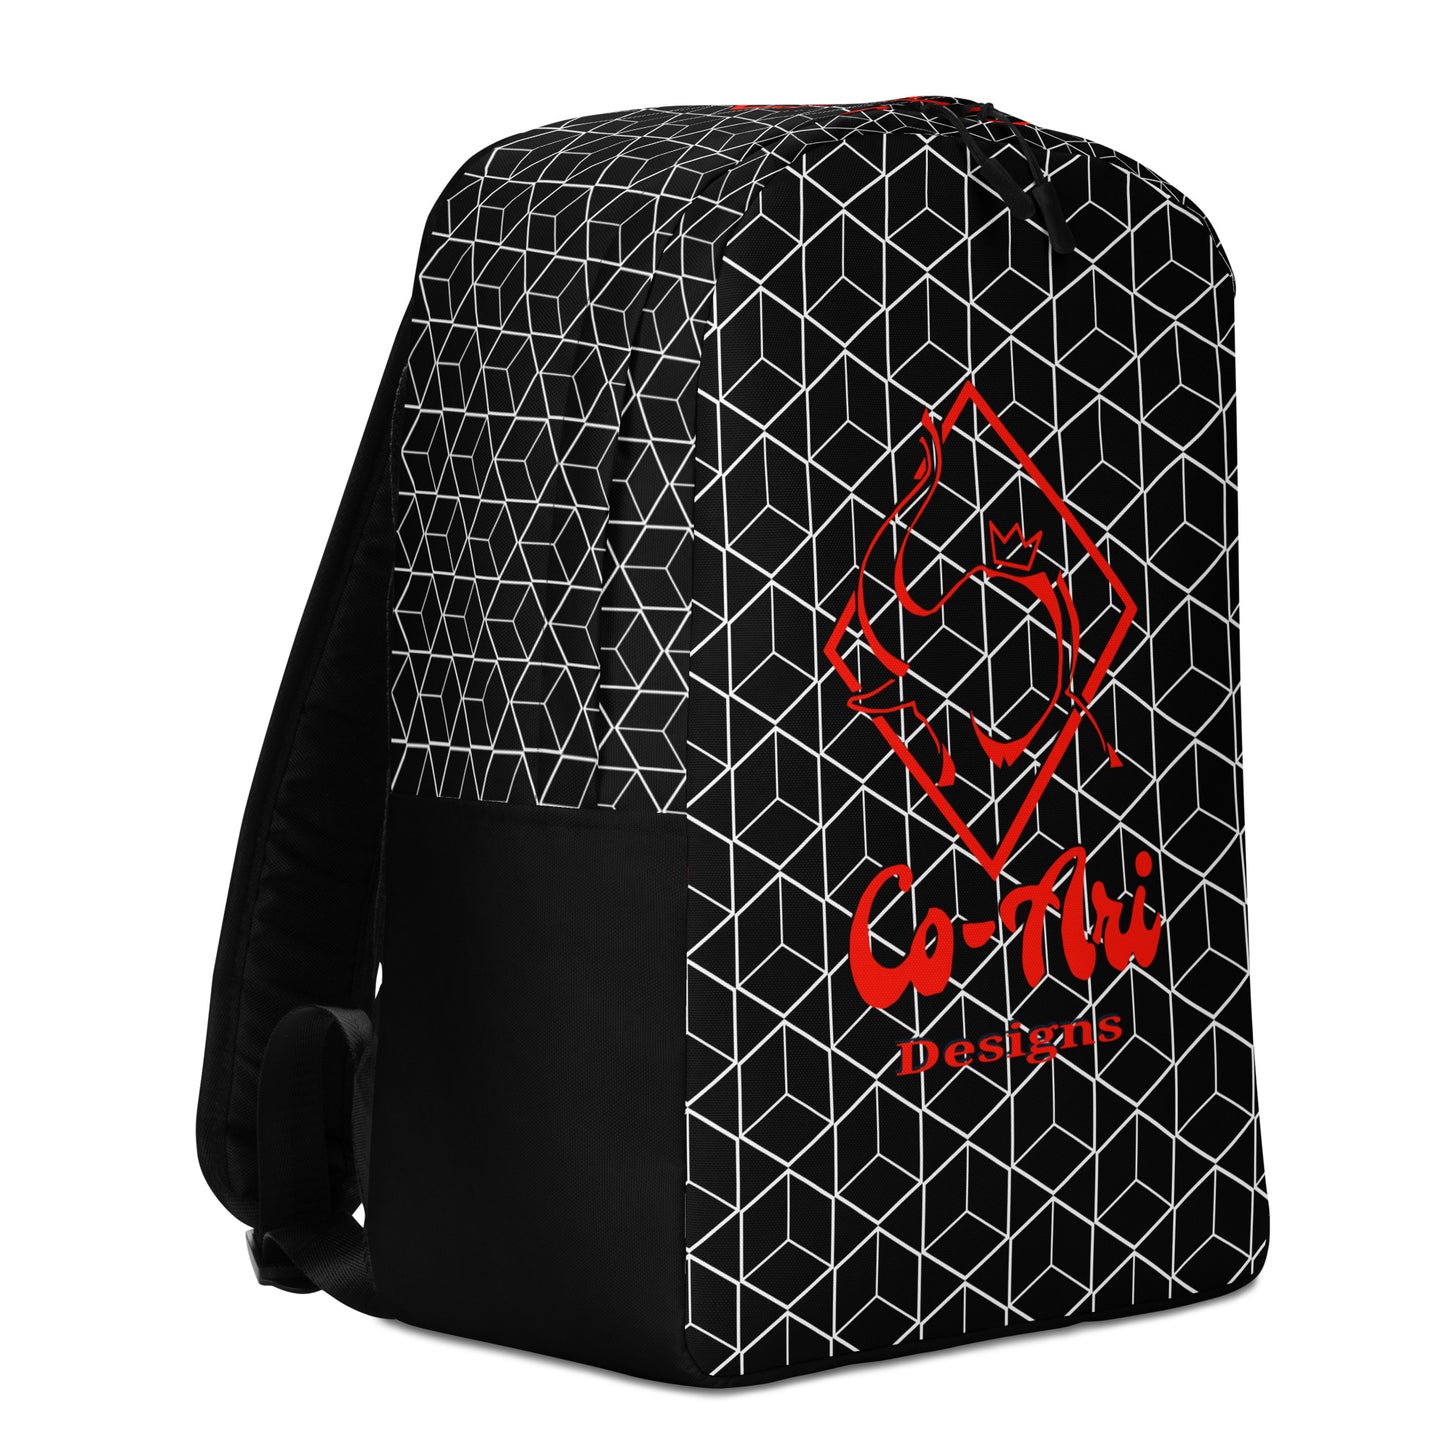 Co-Ari Designs Backpack